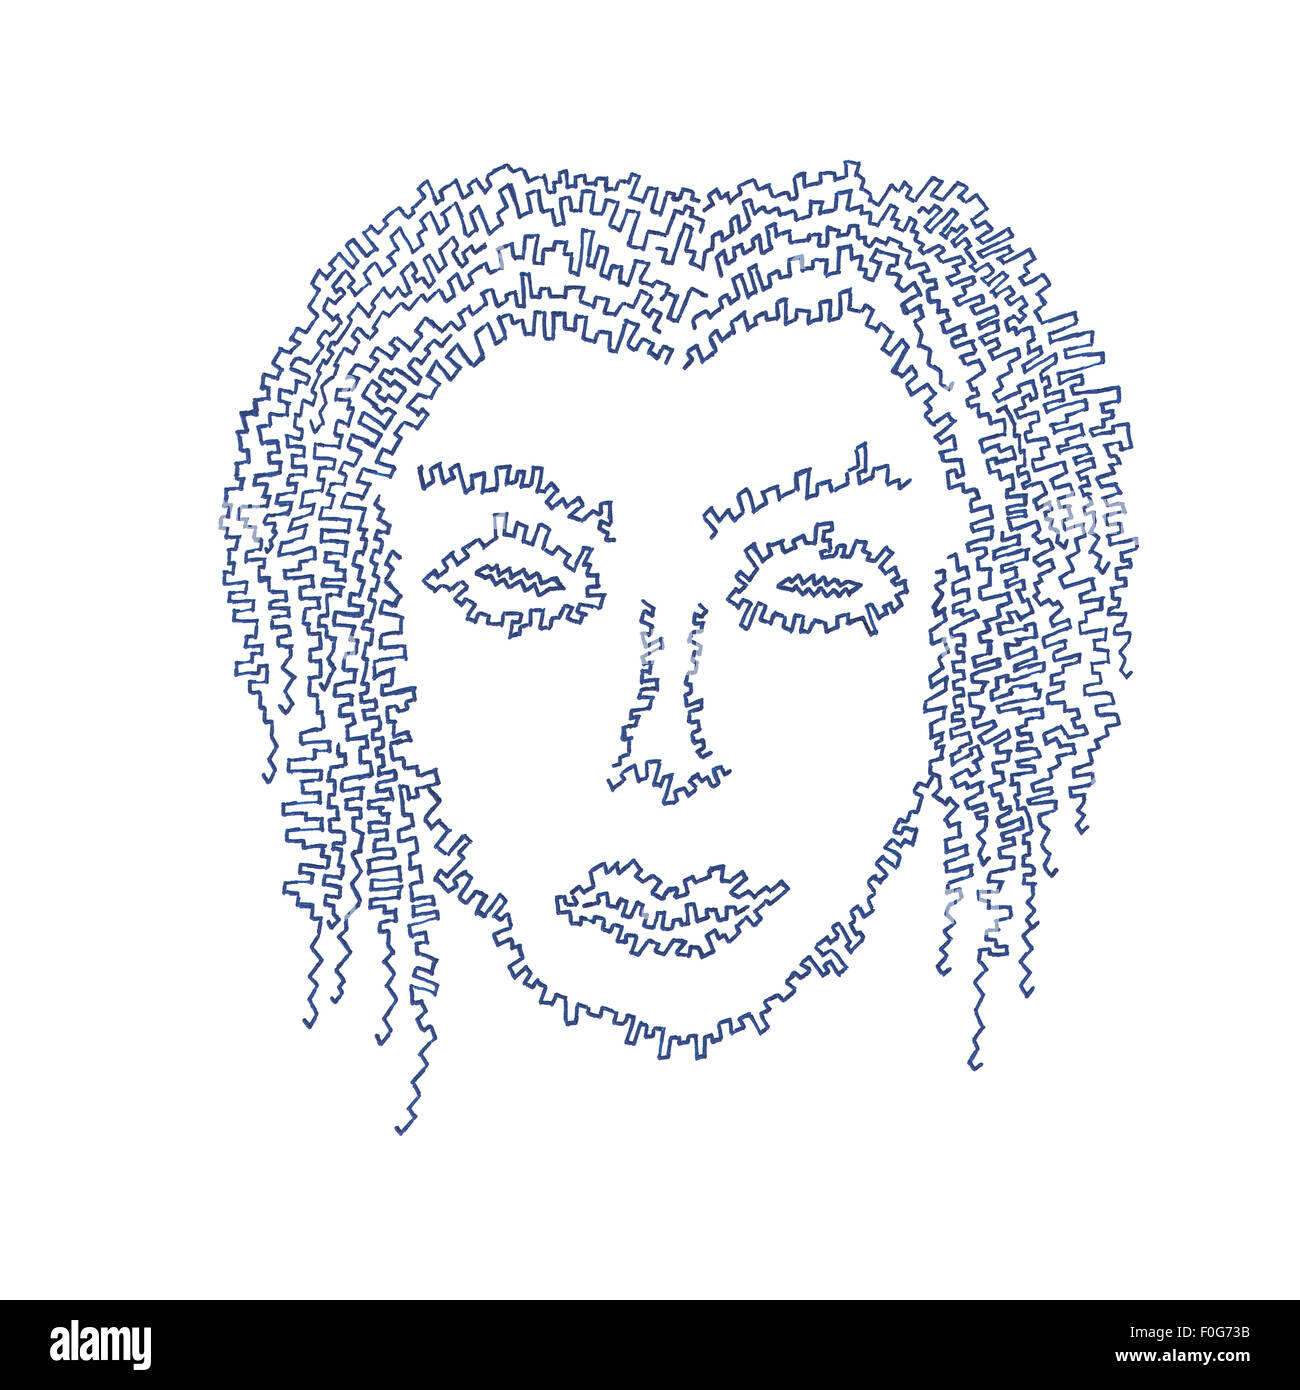 Cyborg female face hand-drawn illustration. Stock Photo